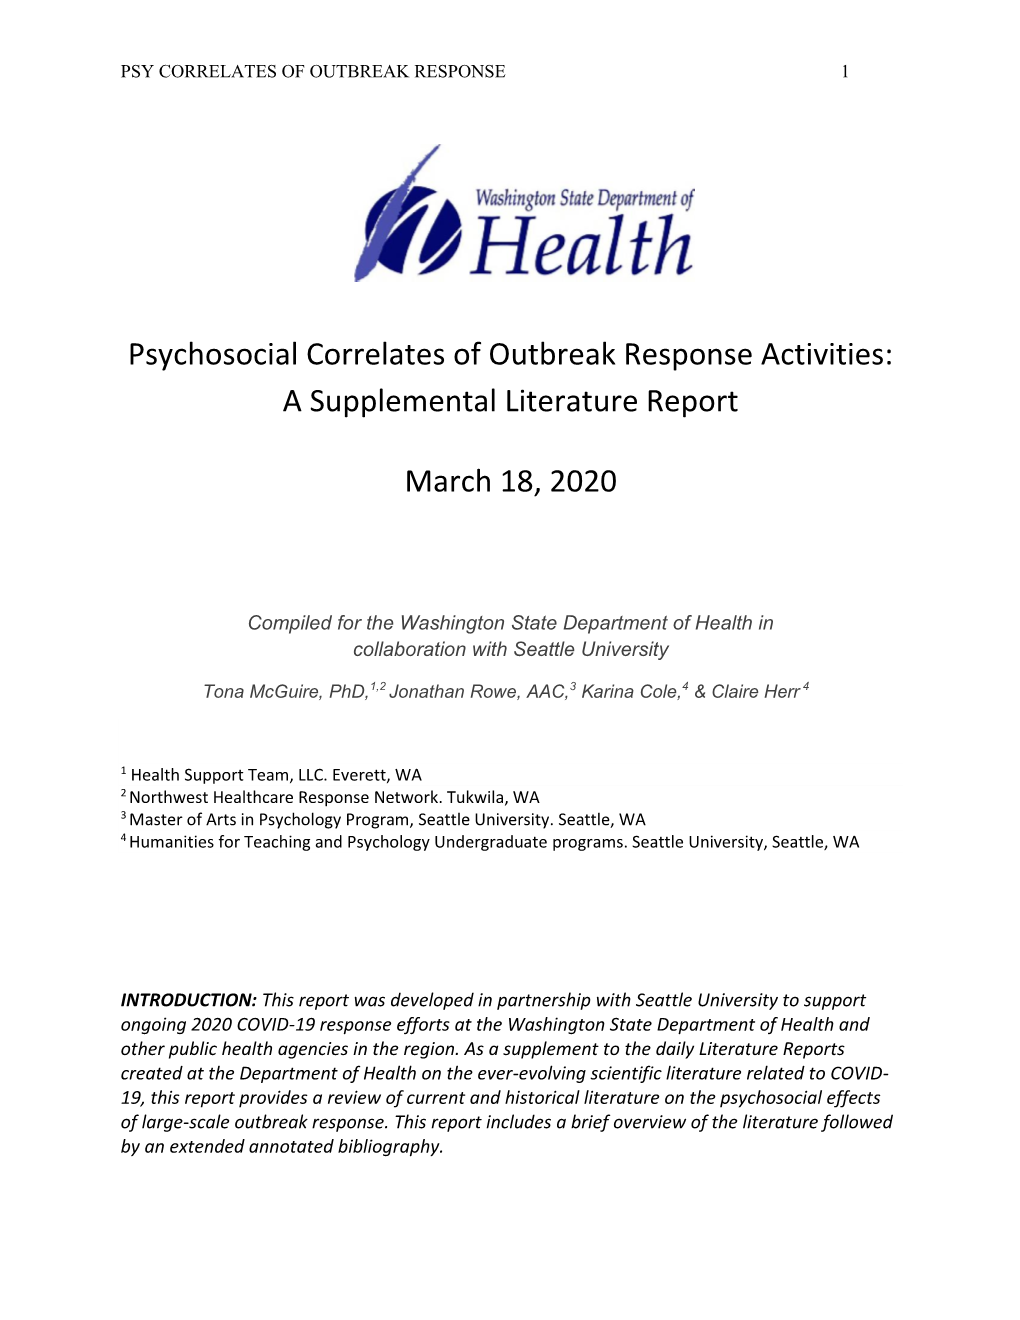 Psychosocial Correlates of Outbreak Response Activities: a Supplemental Literature Report